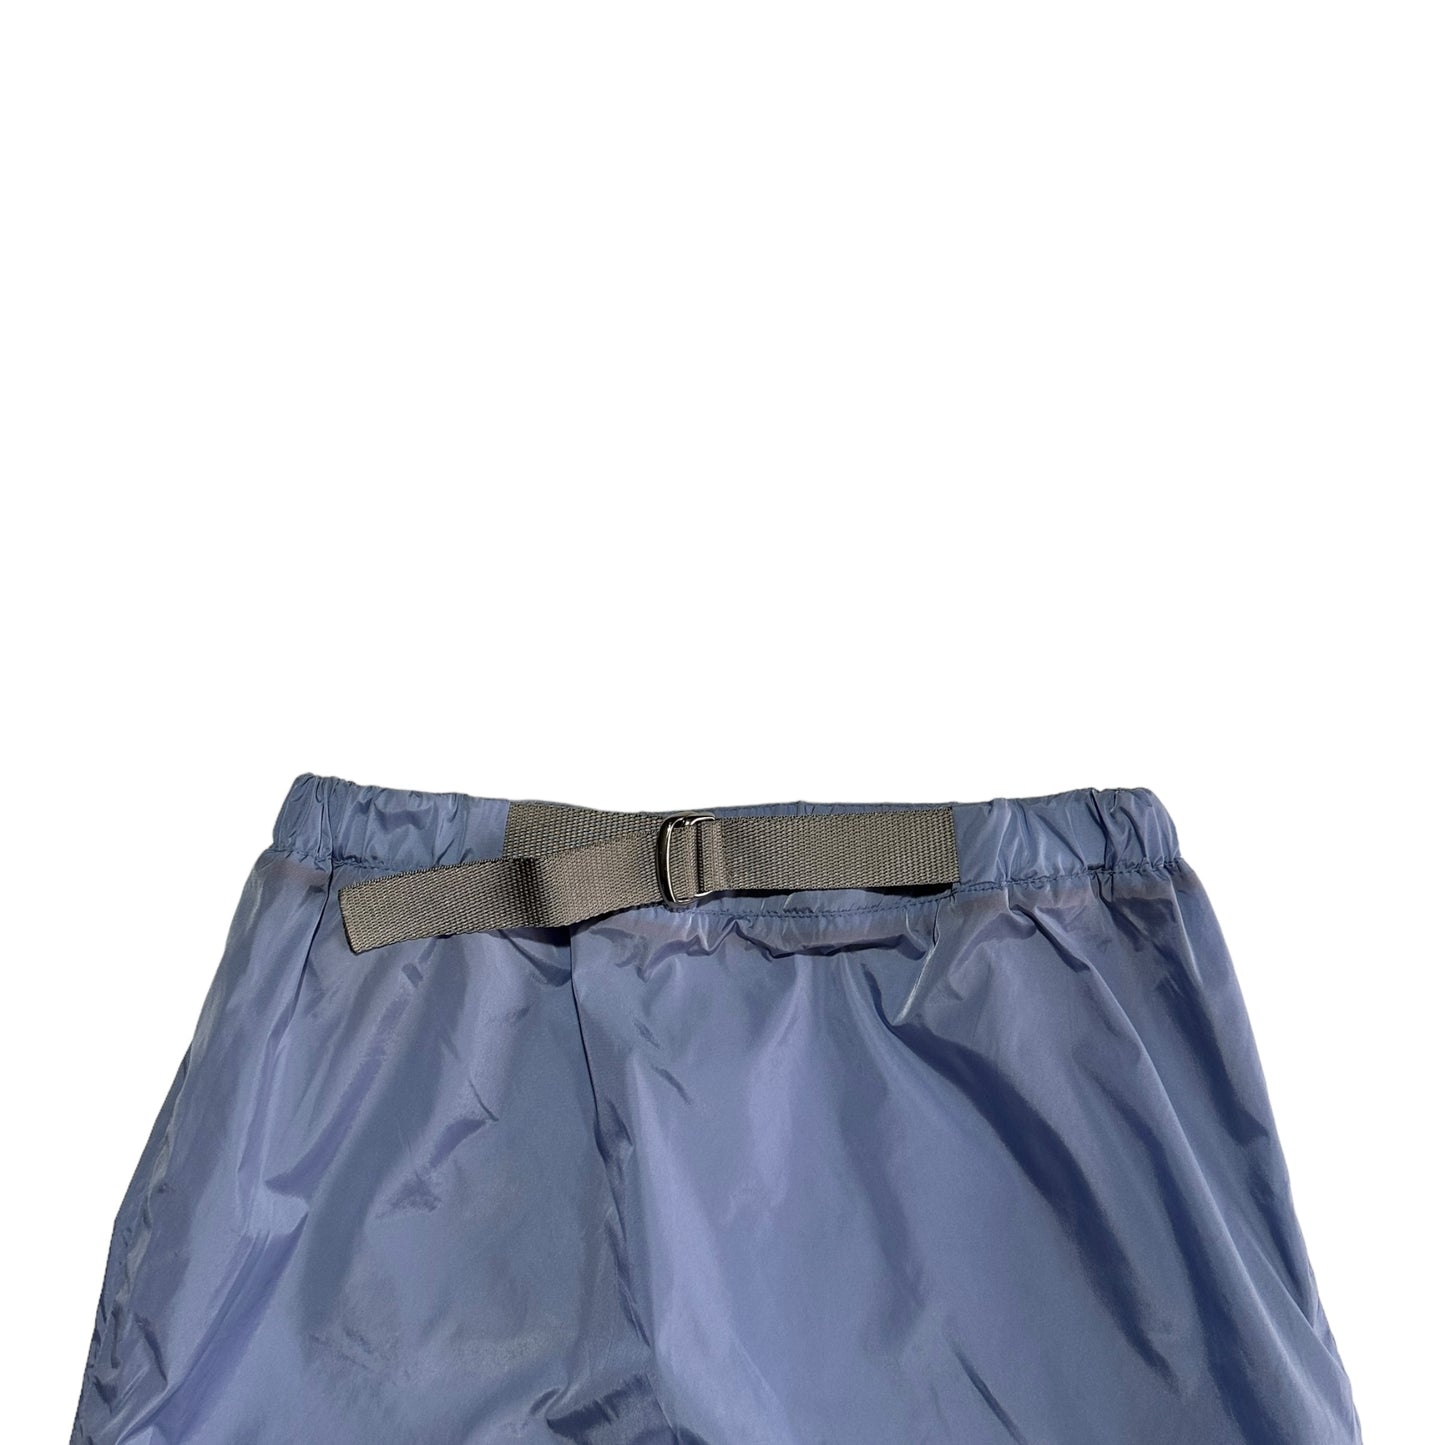 S/S 2000 Prada Sport Adjustable Length Skirt (32W)